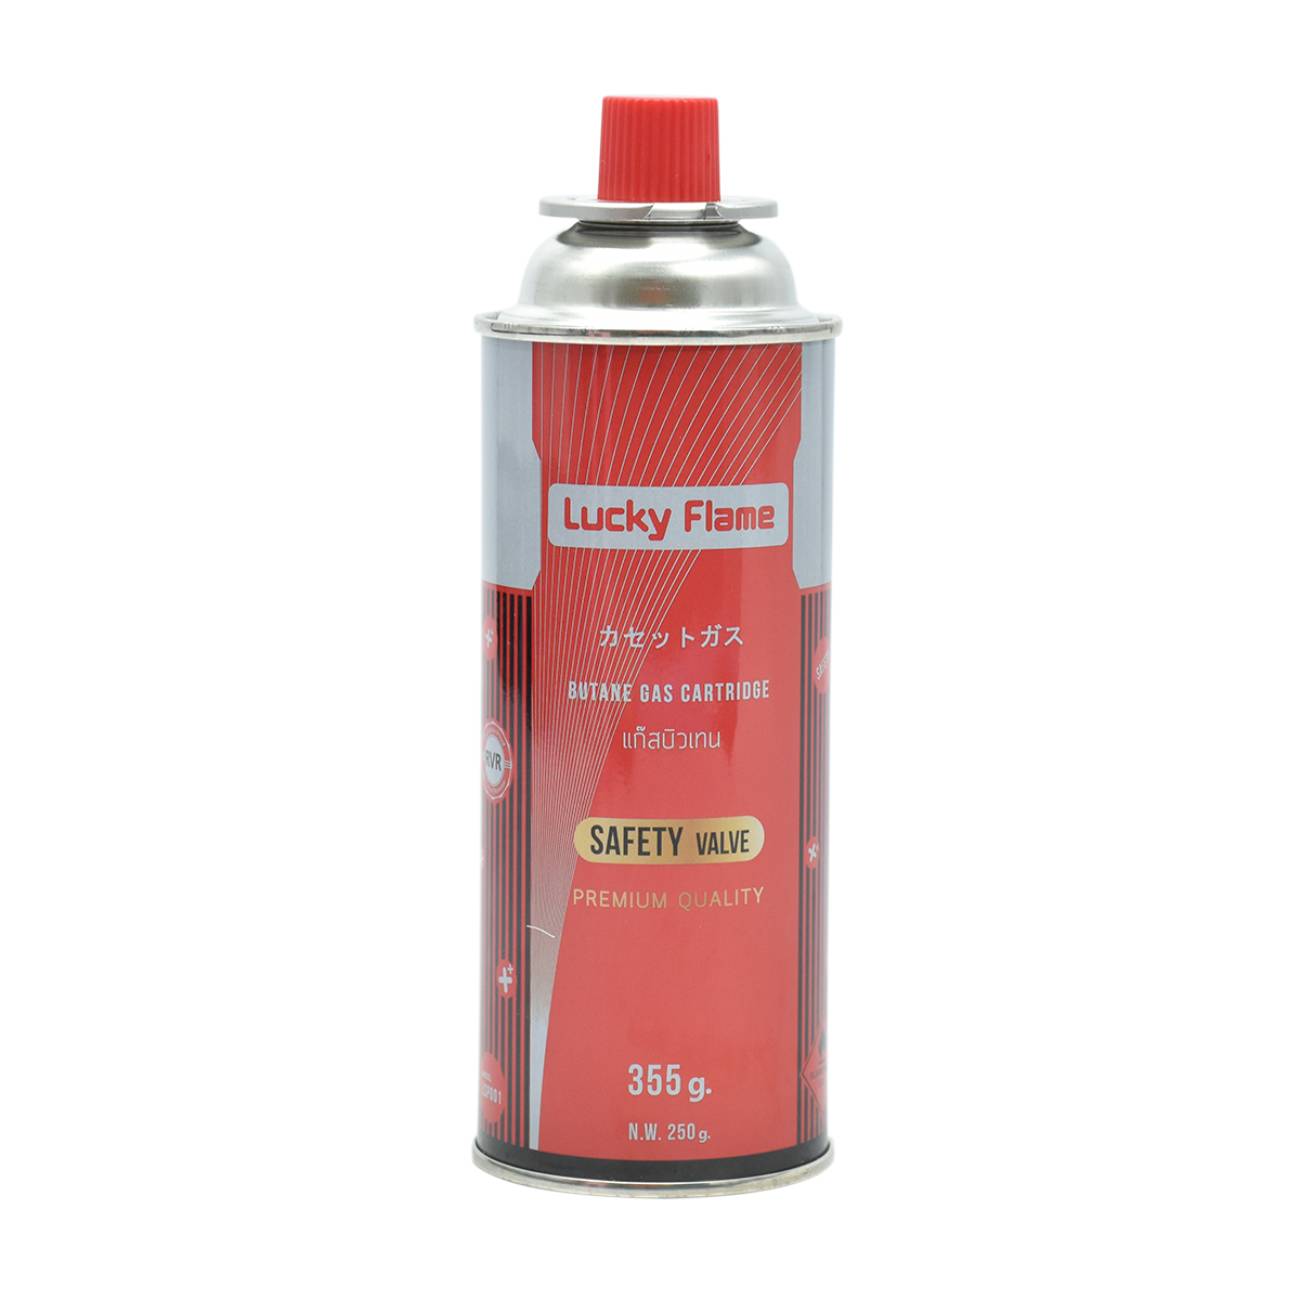 LUCKY FLAME LSP001 แก๊สกระป๋อง SAFETY VALVE (28 กระป๋อง/ลัง)